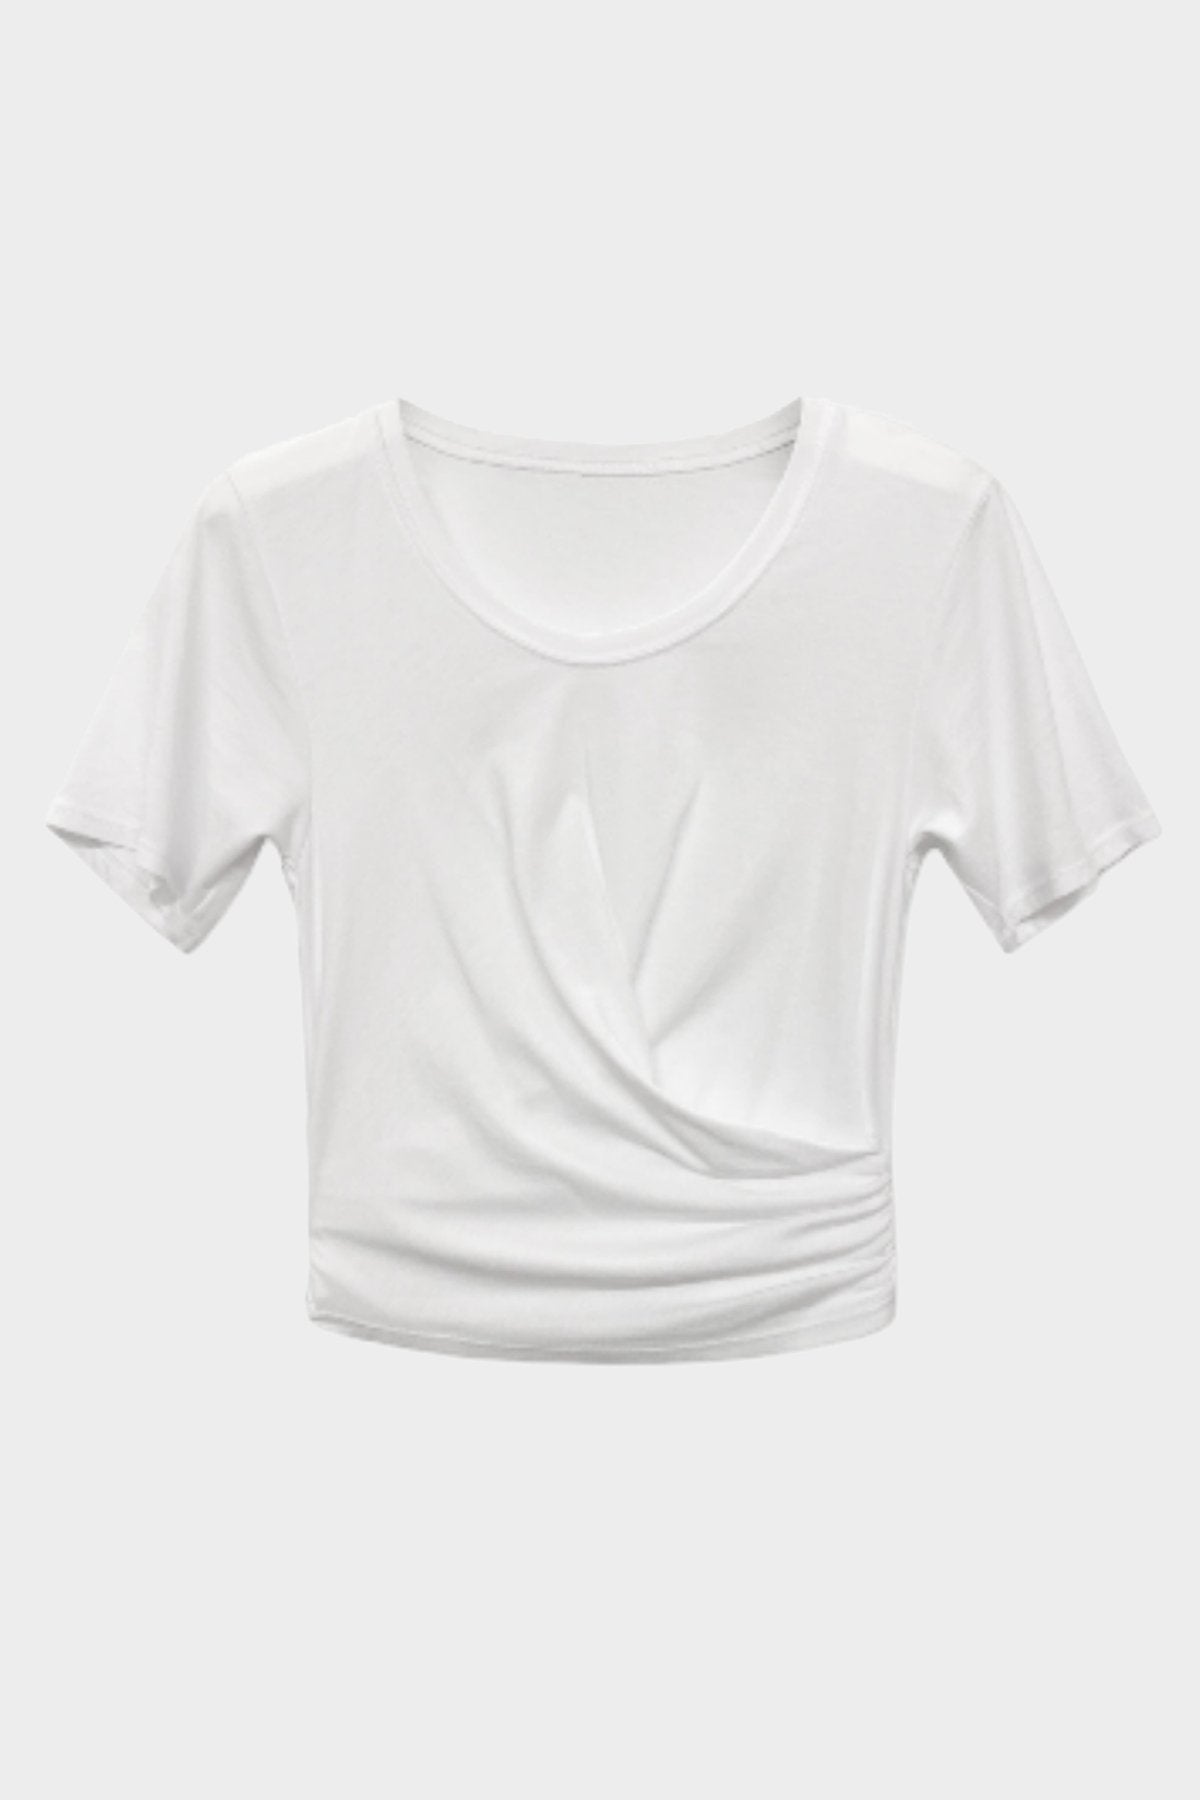 Chantria Knit Top in White - shop-olivia.com